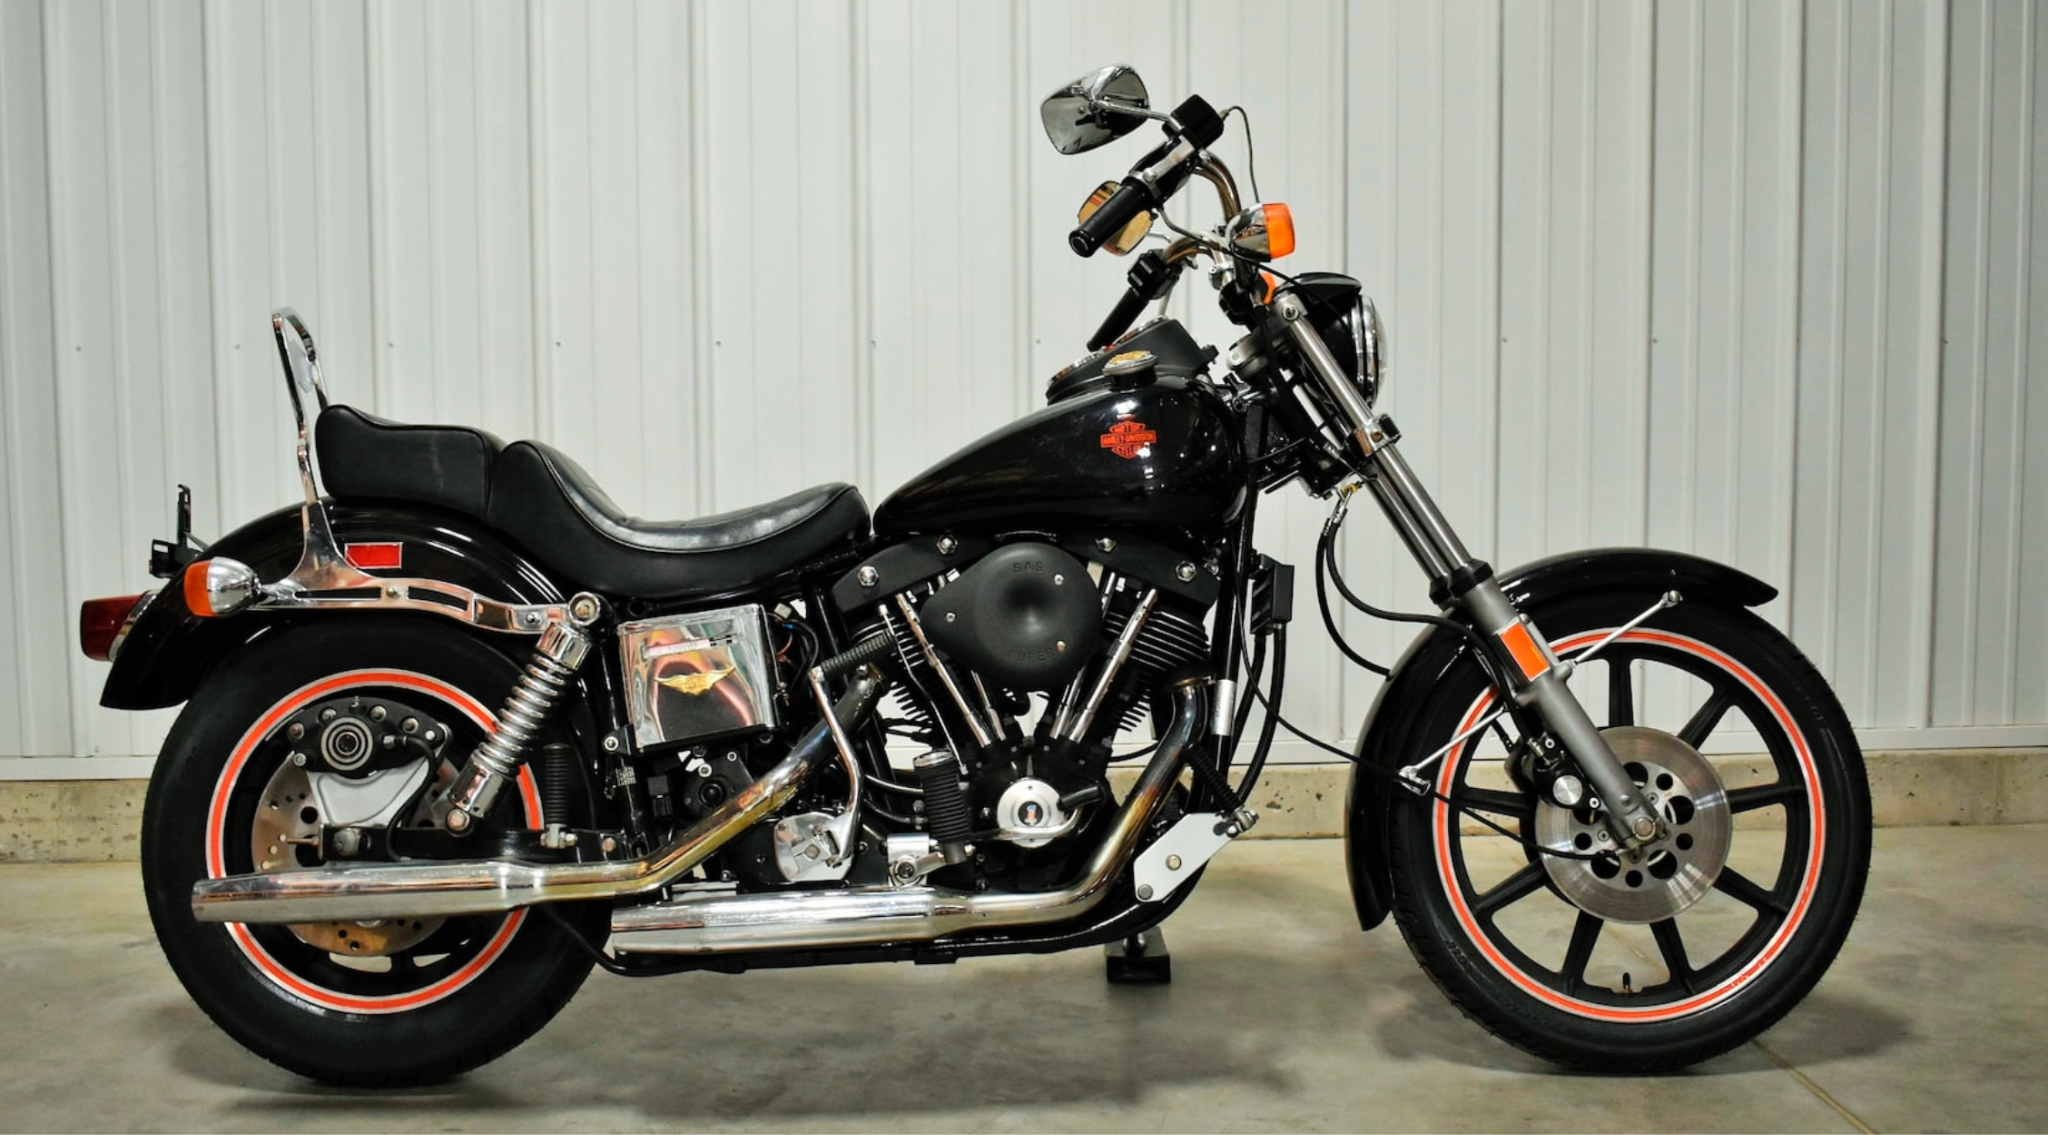 The Harley-Davis Sturgis Motorcycles